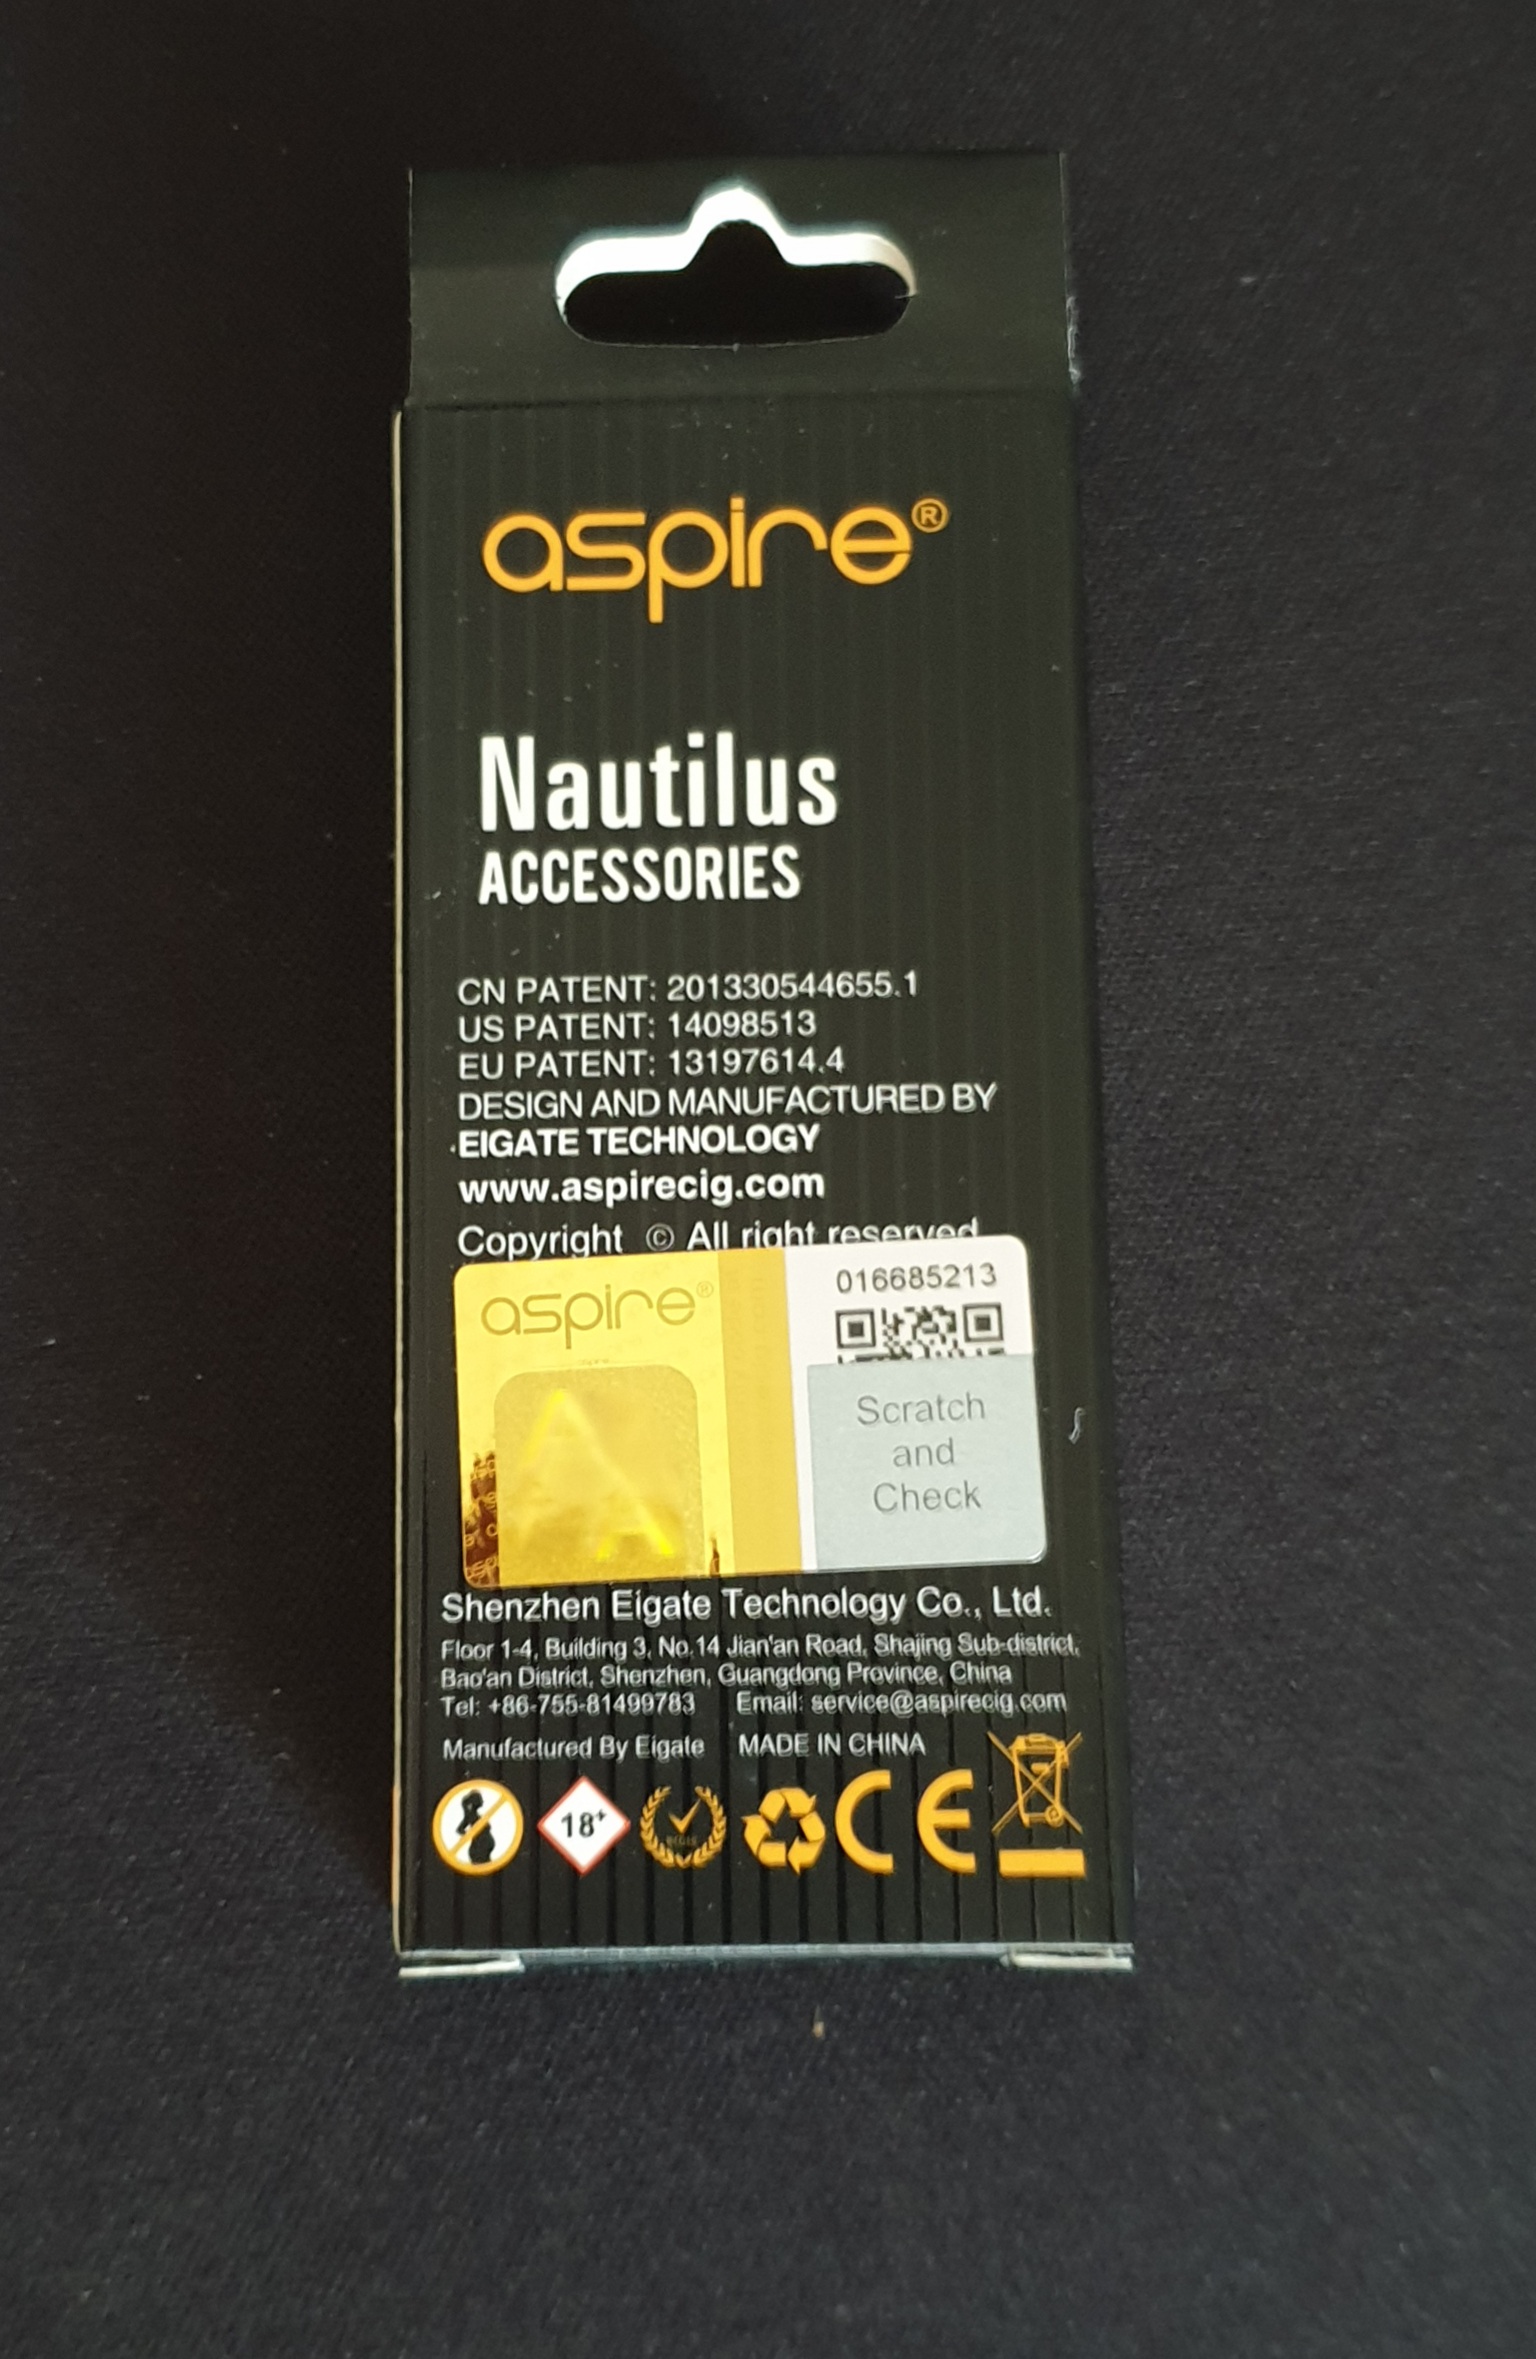 1 x 5 Stück ASPIRE Nautilus BVC Coil 1.6 Ohm